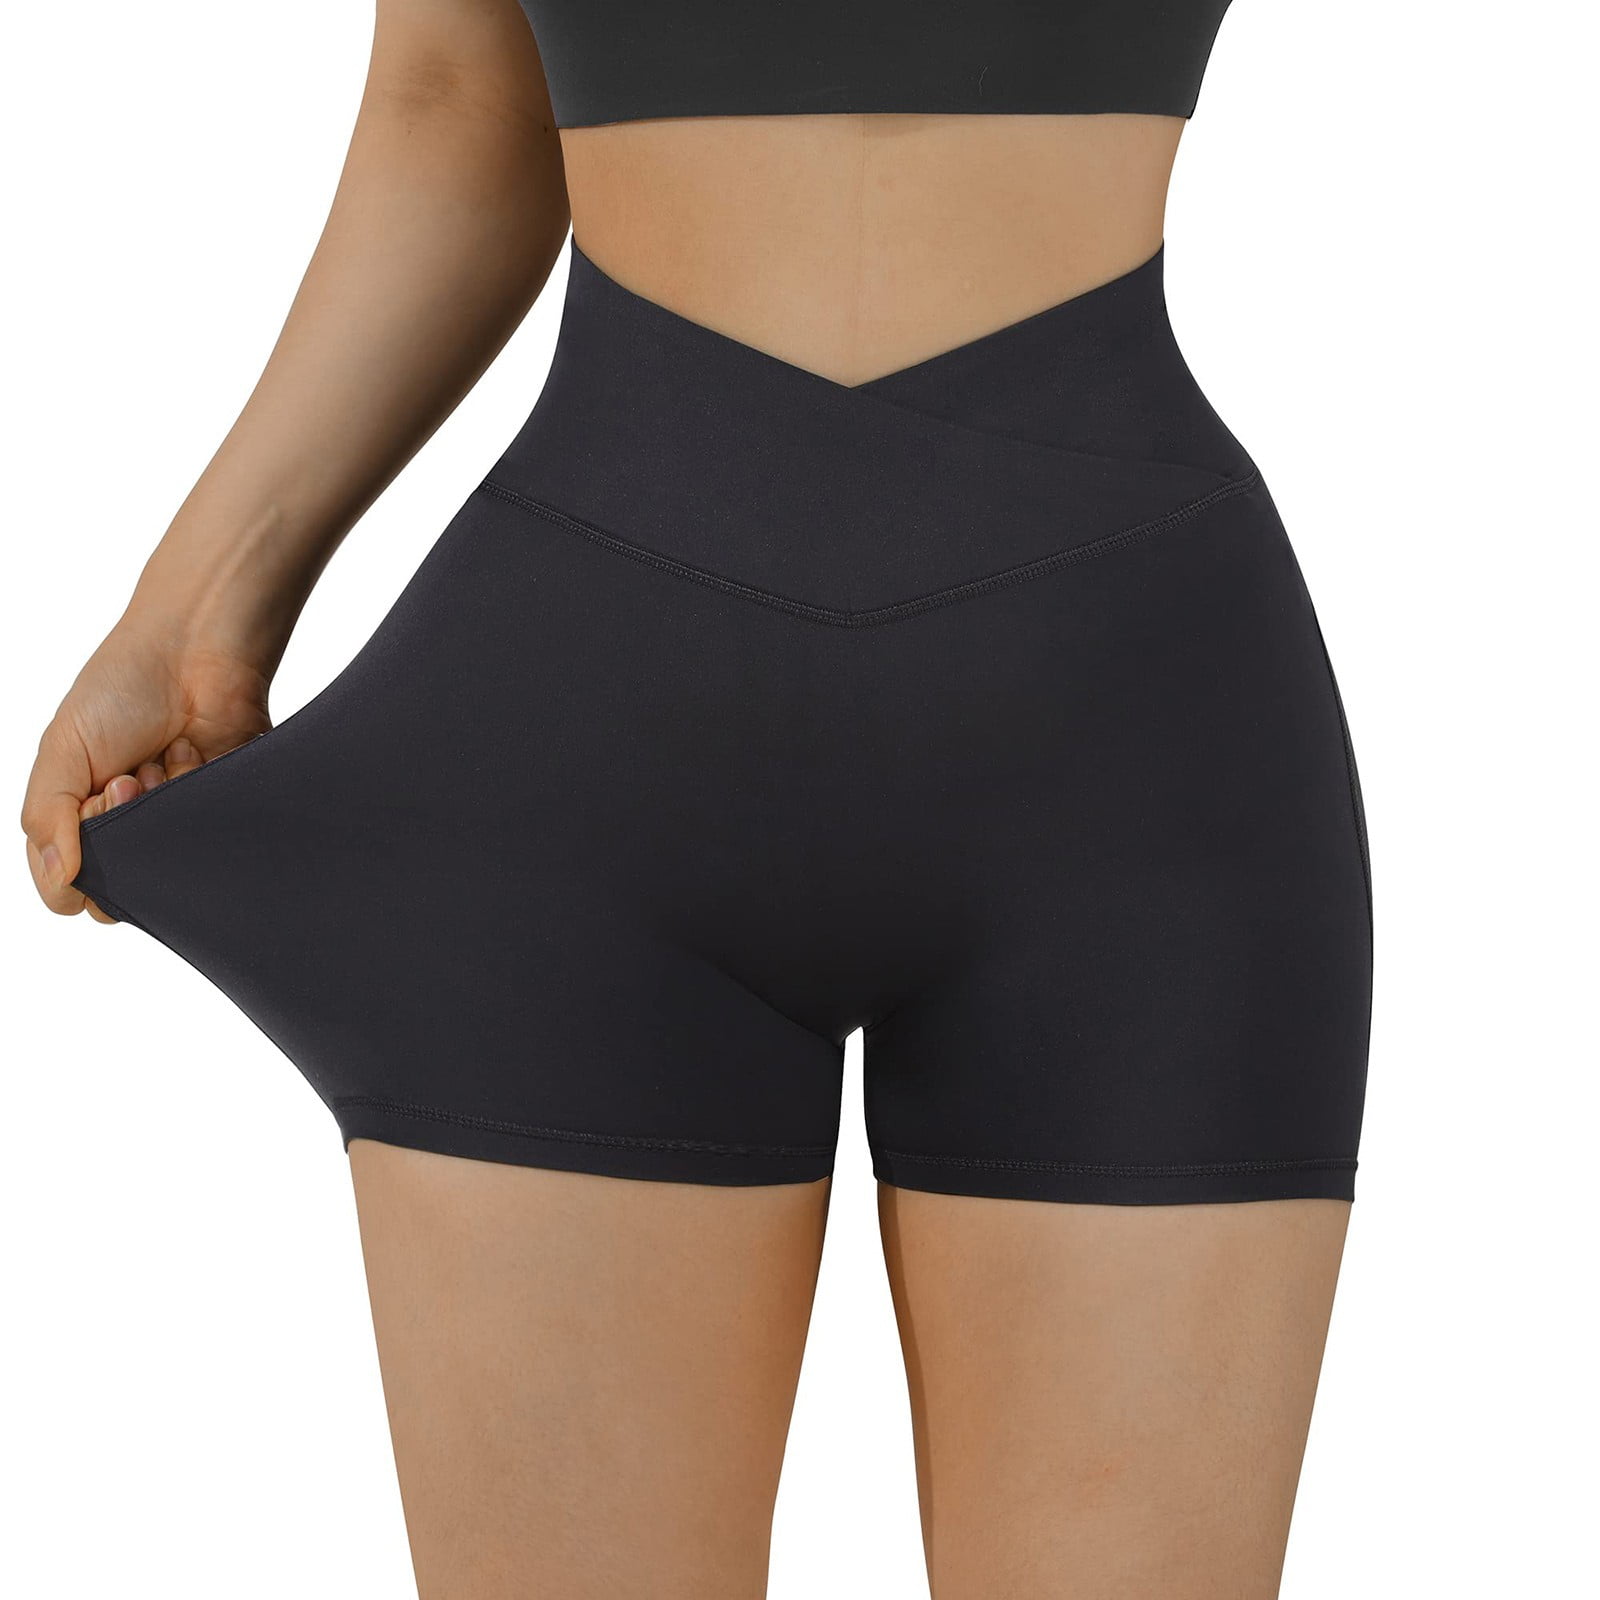 adviicd Petite Short Pants For Women Yoga Dress Pants Women's Cut